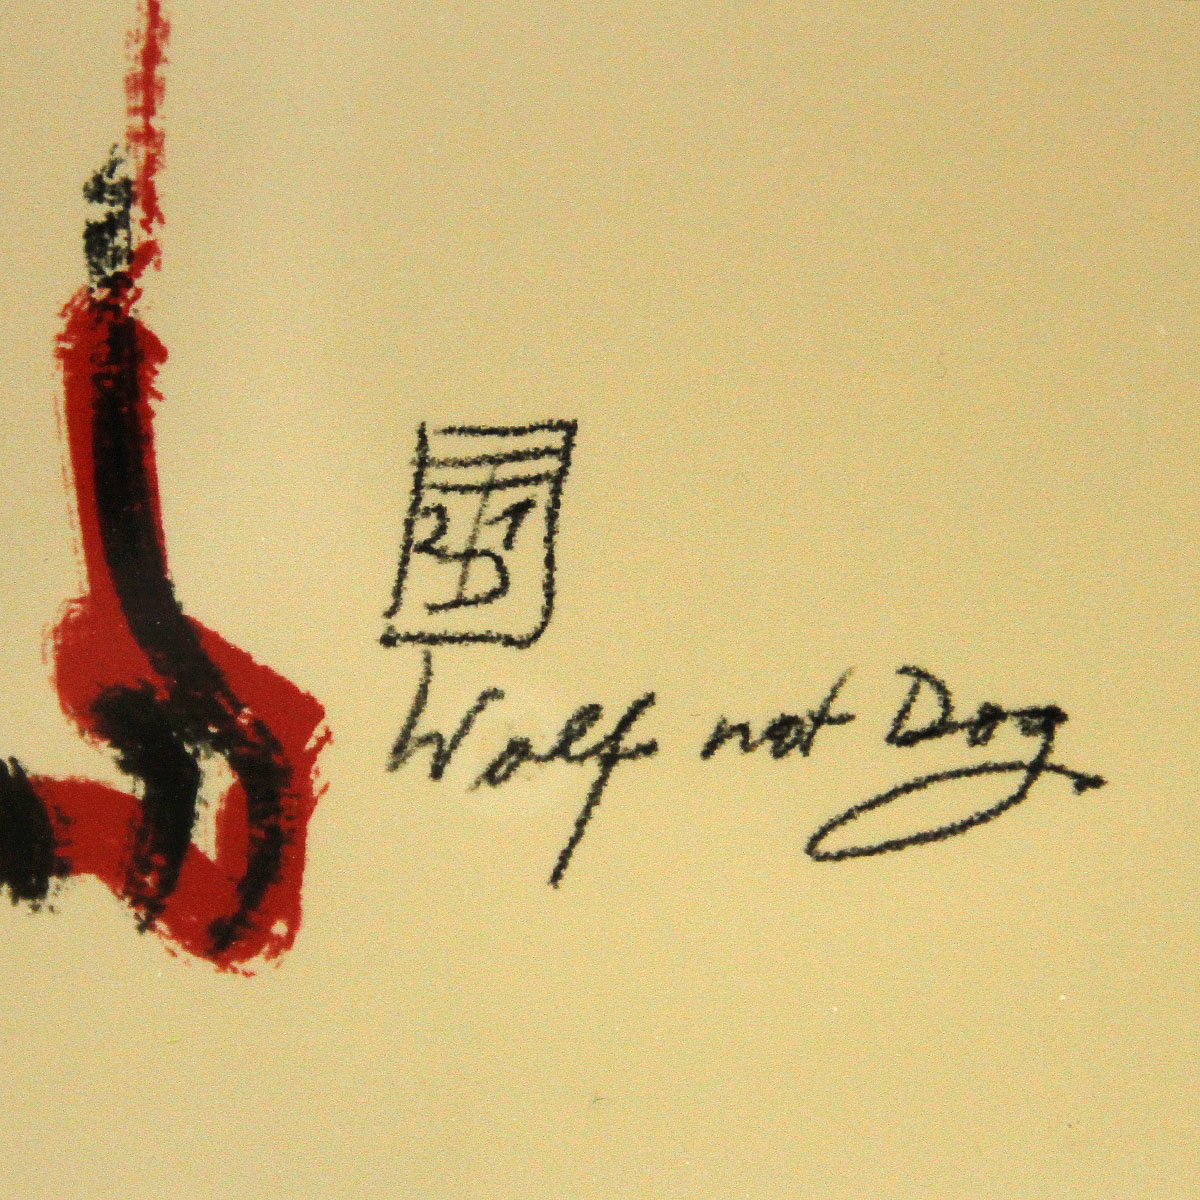 D. Hille: "Wolf not Dog", Grafik/Fotodruck (A)